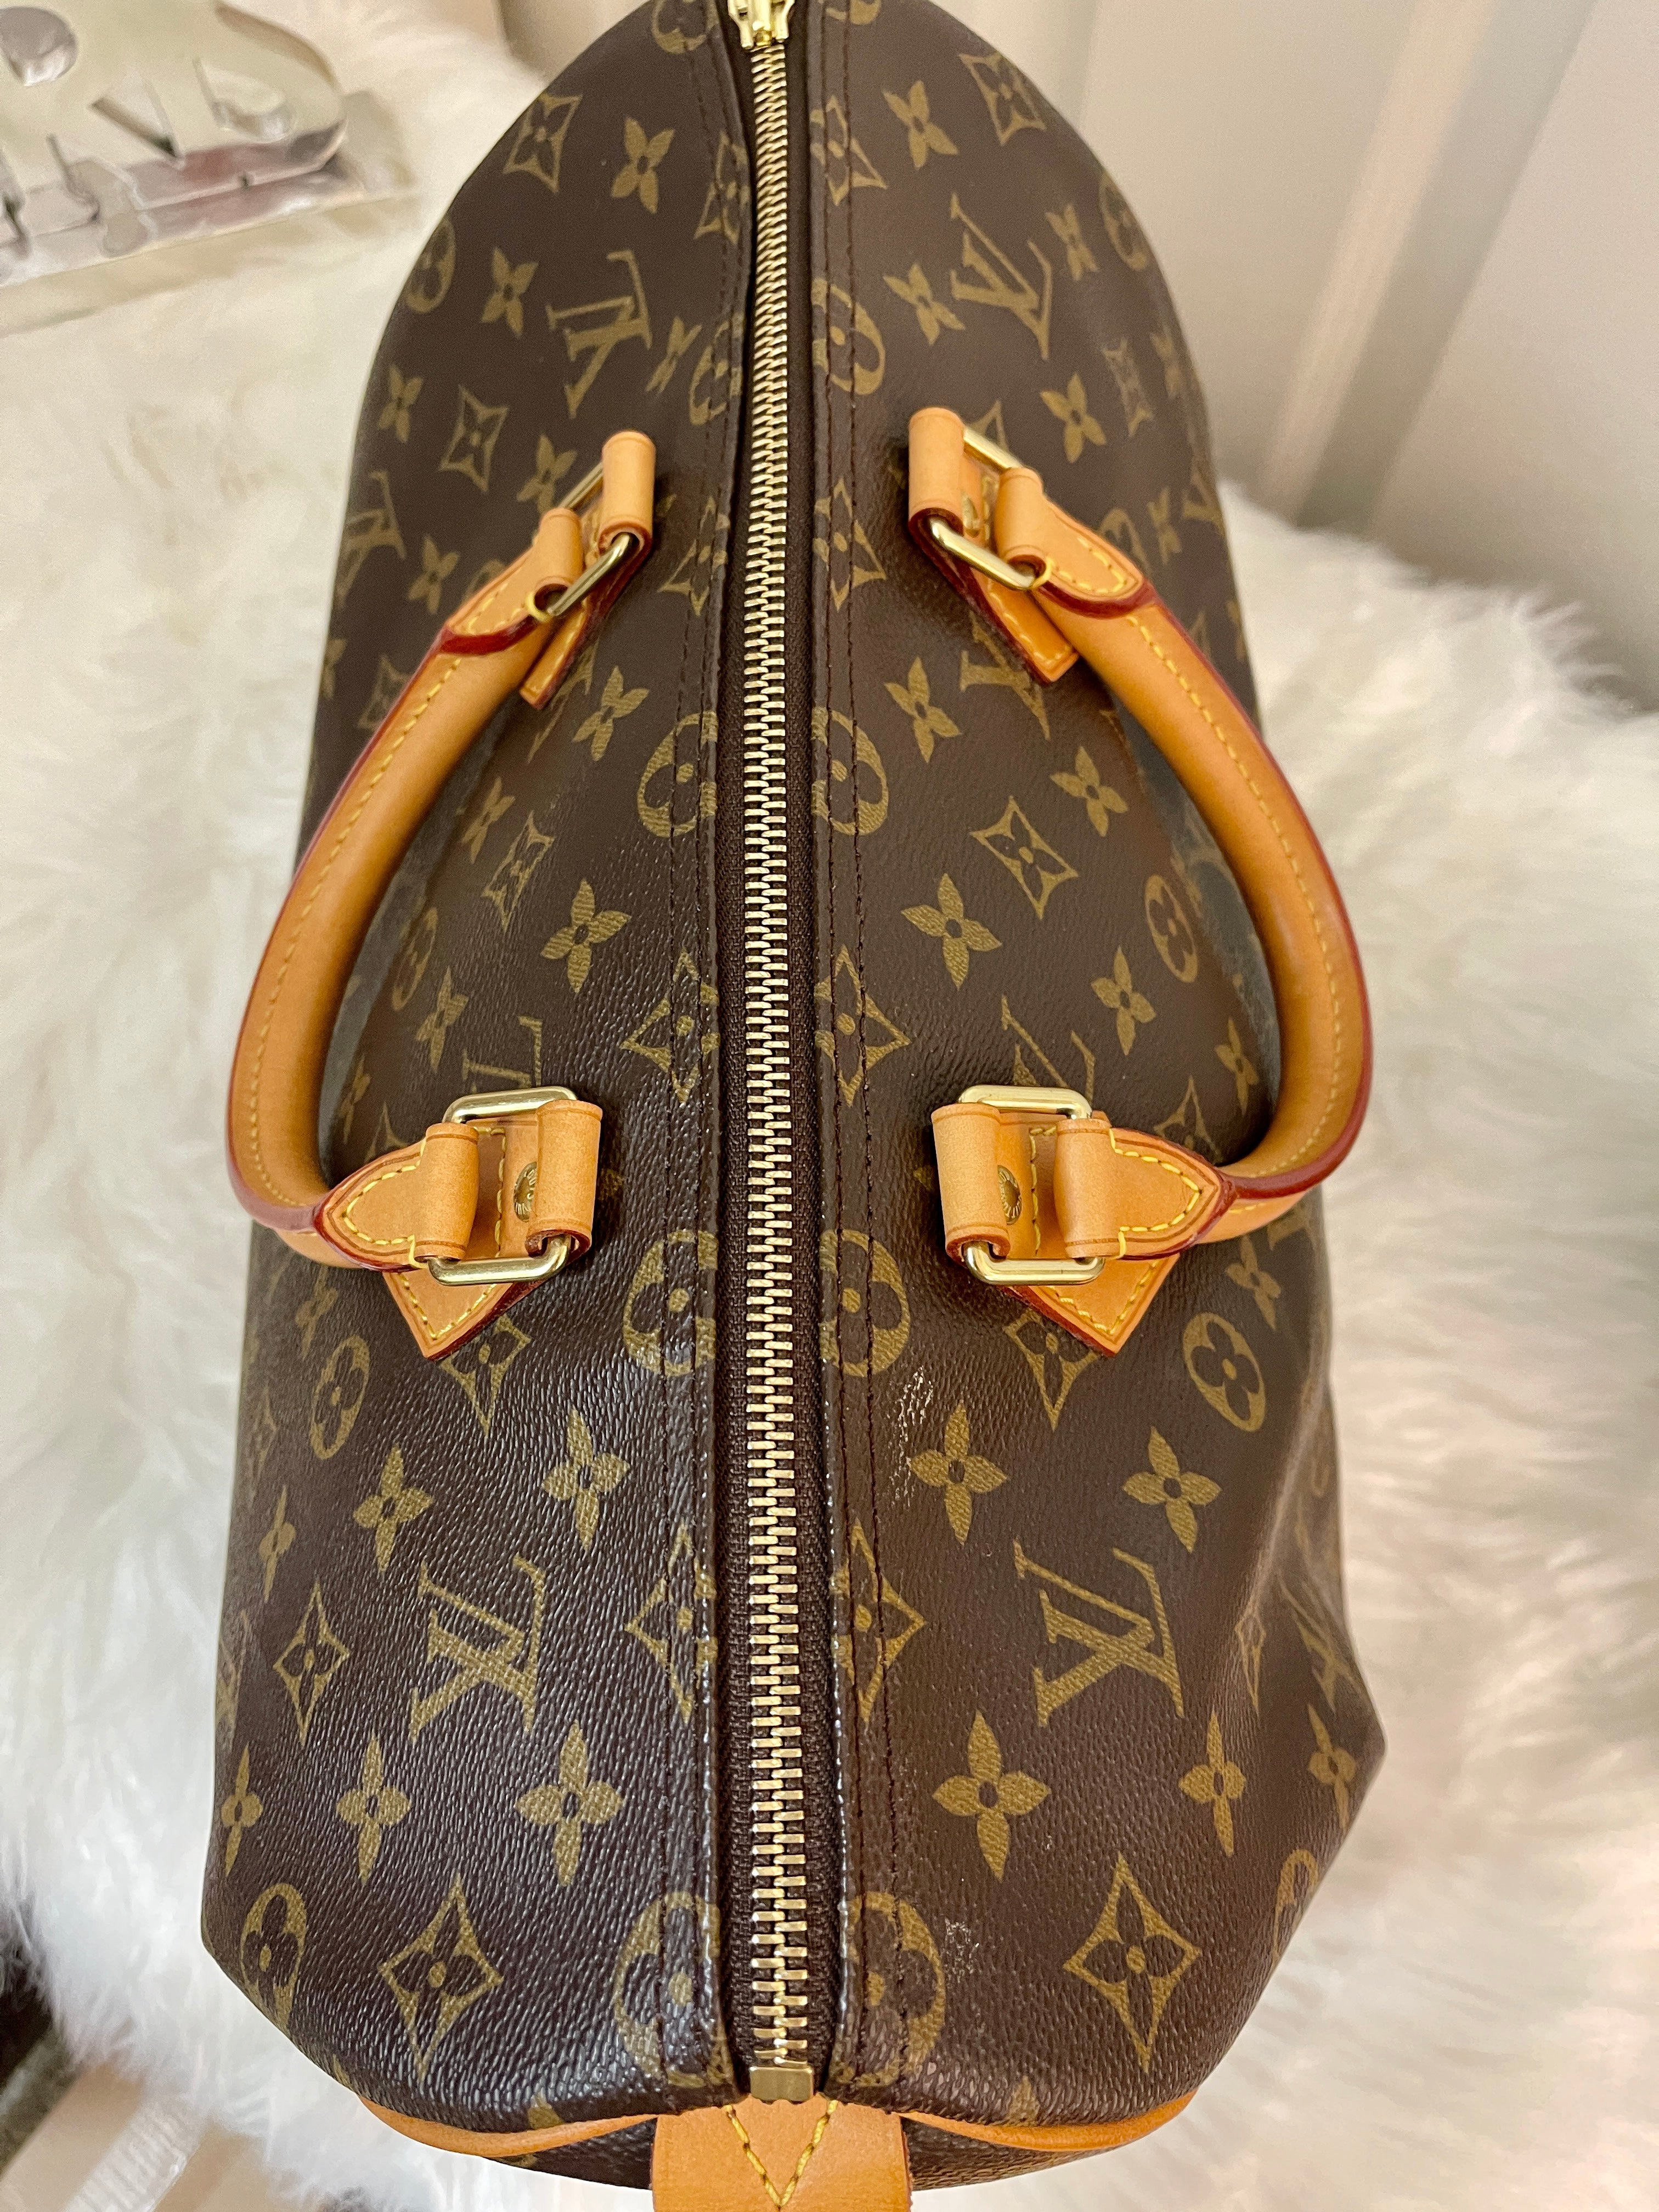 Customized Louis Vuitton Speedy 35 Legendary Love Handbag in Monogram Canvas